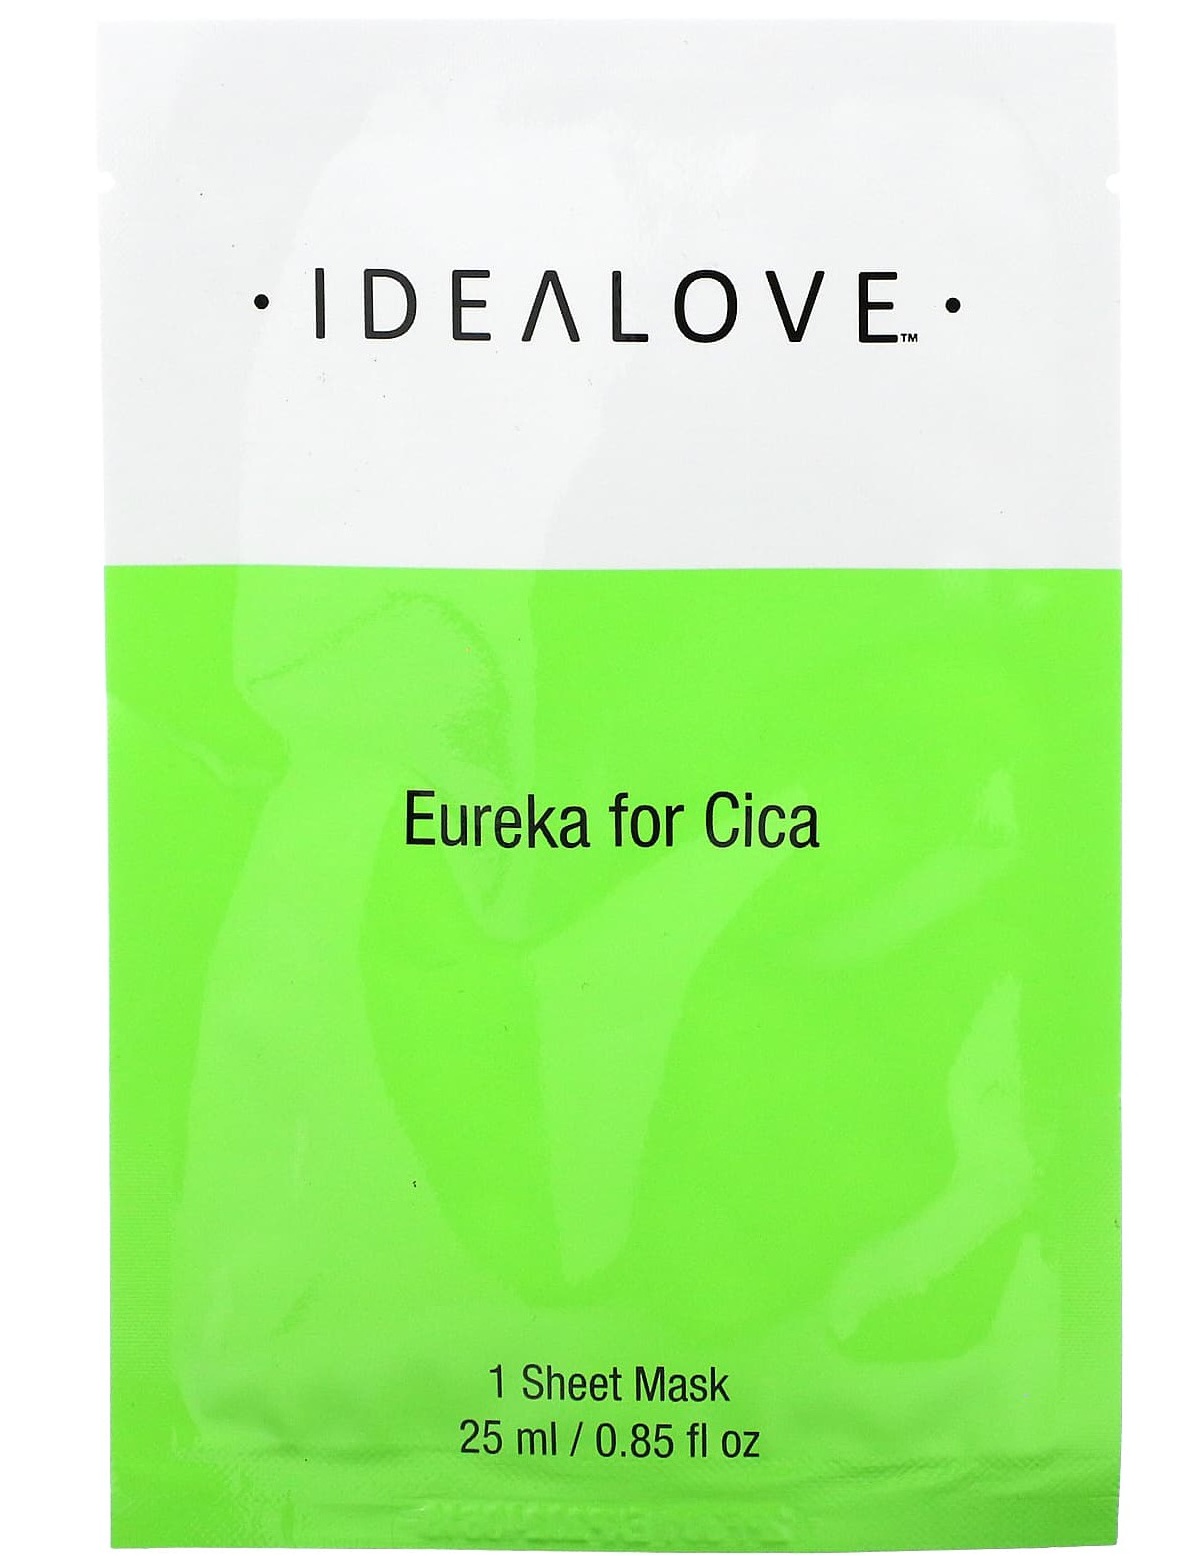 Idealove Eureka For Cica Sheet Mask